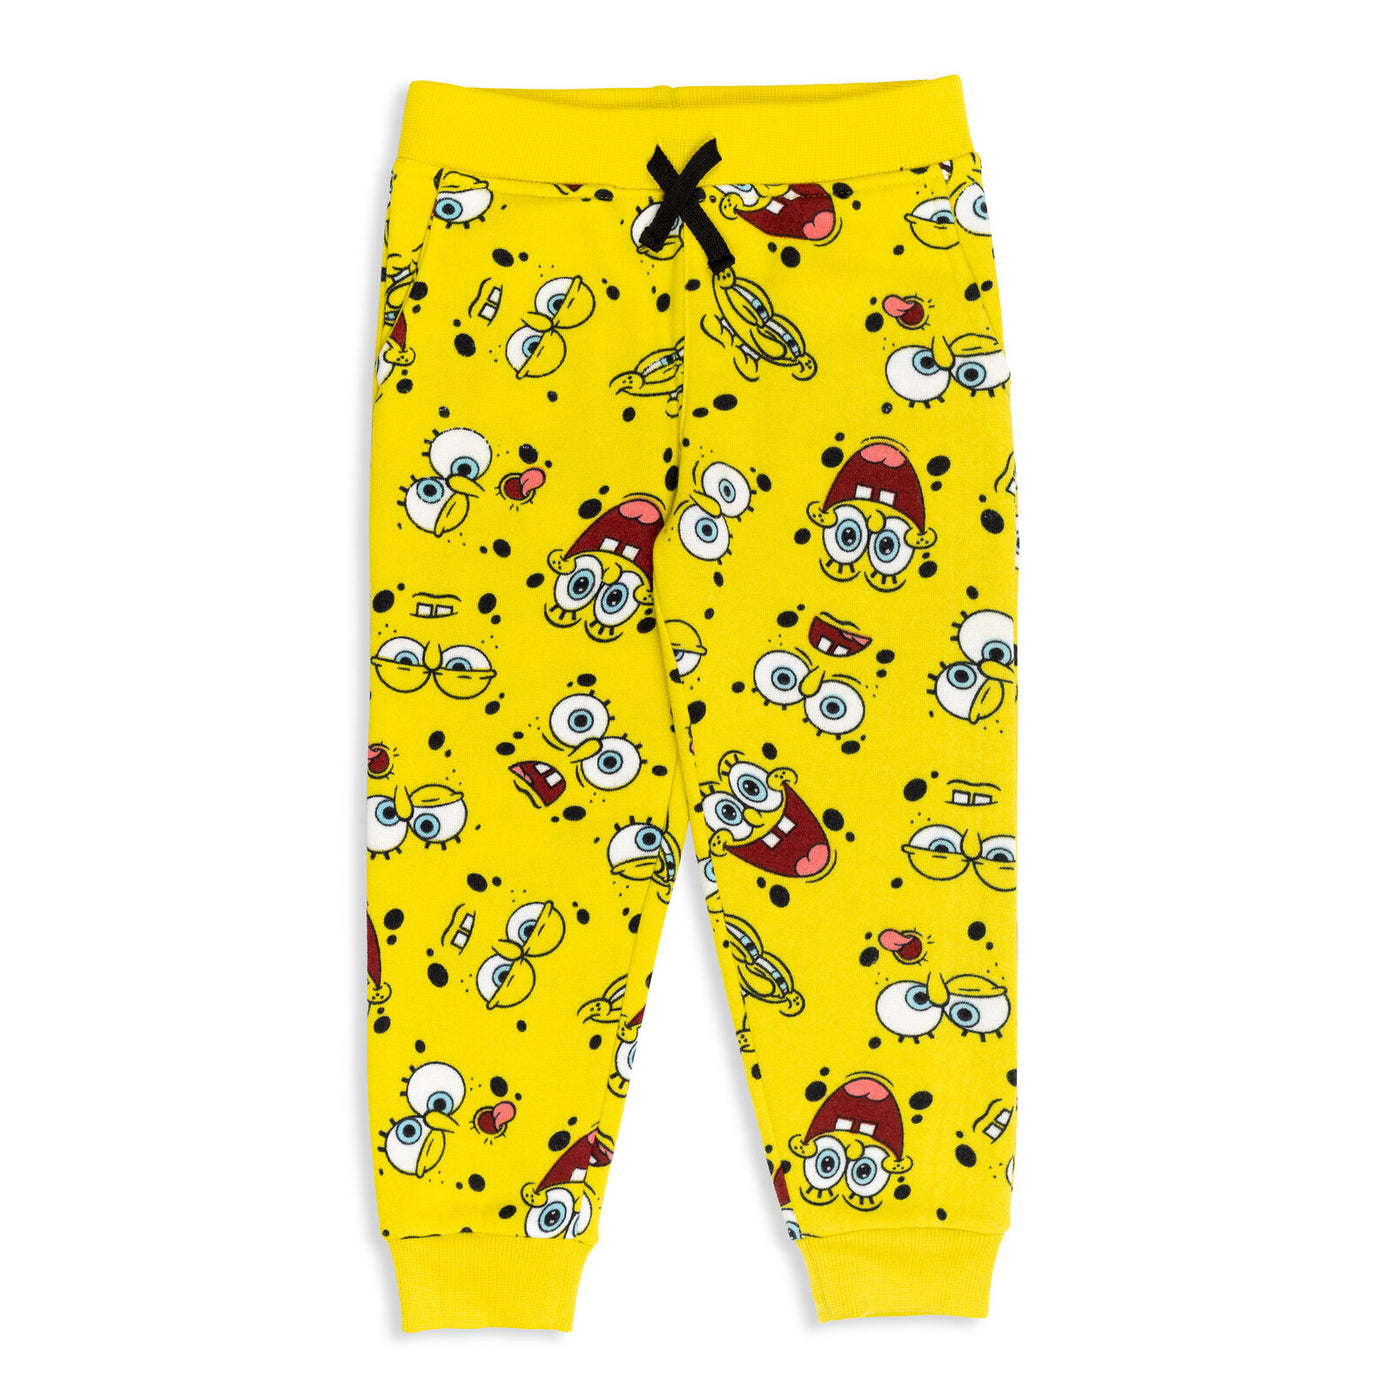 SpongeBob SquarePants Fleece 2 Pack Pants